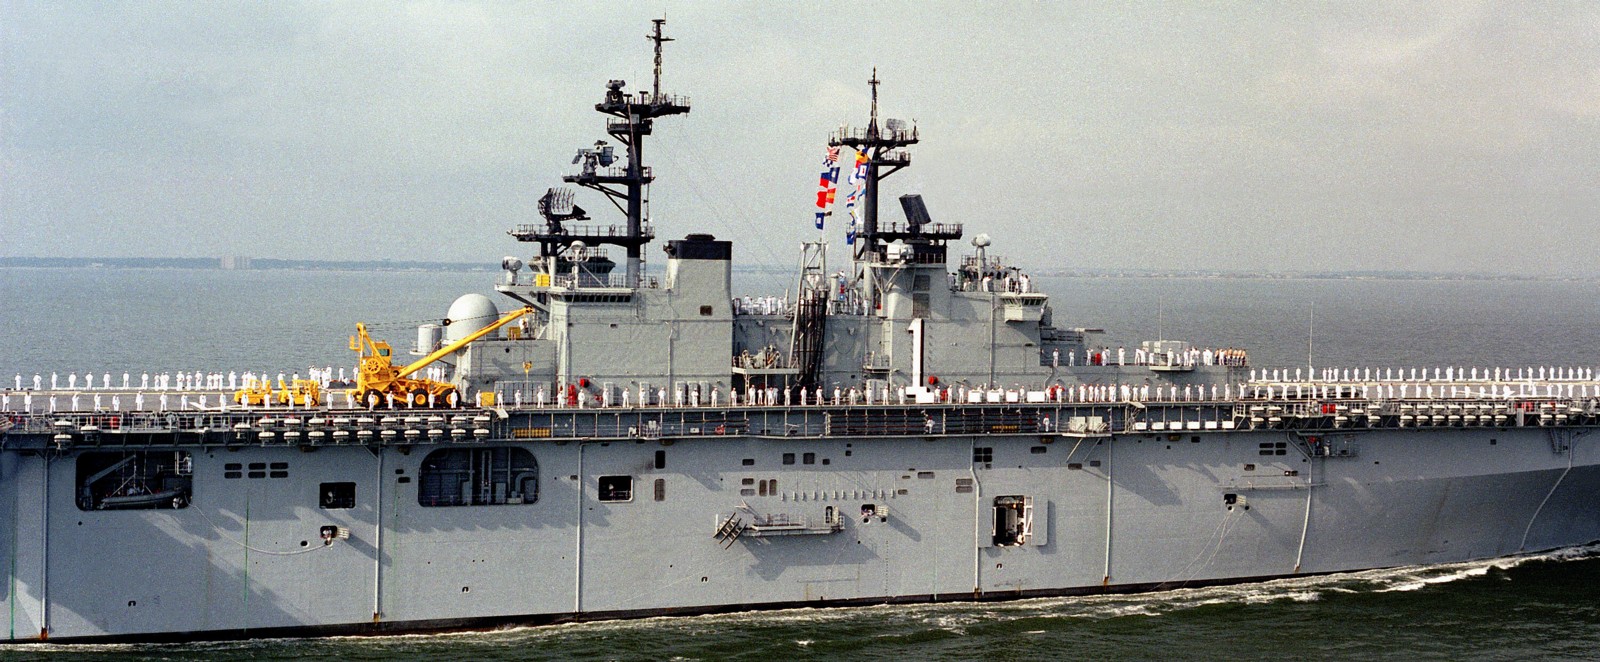 lhd-1 uss wasp amphibious assault landing ship dock helicopter us navy naval station norfolk virginia 61